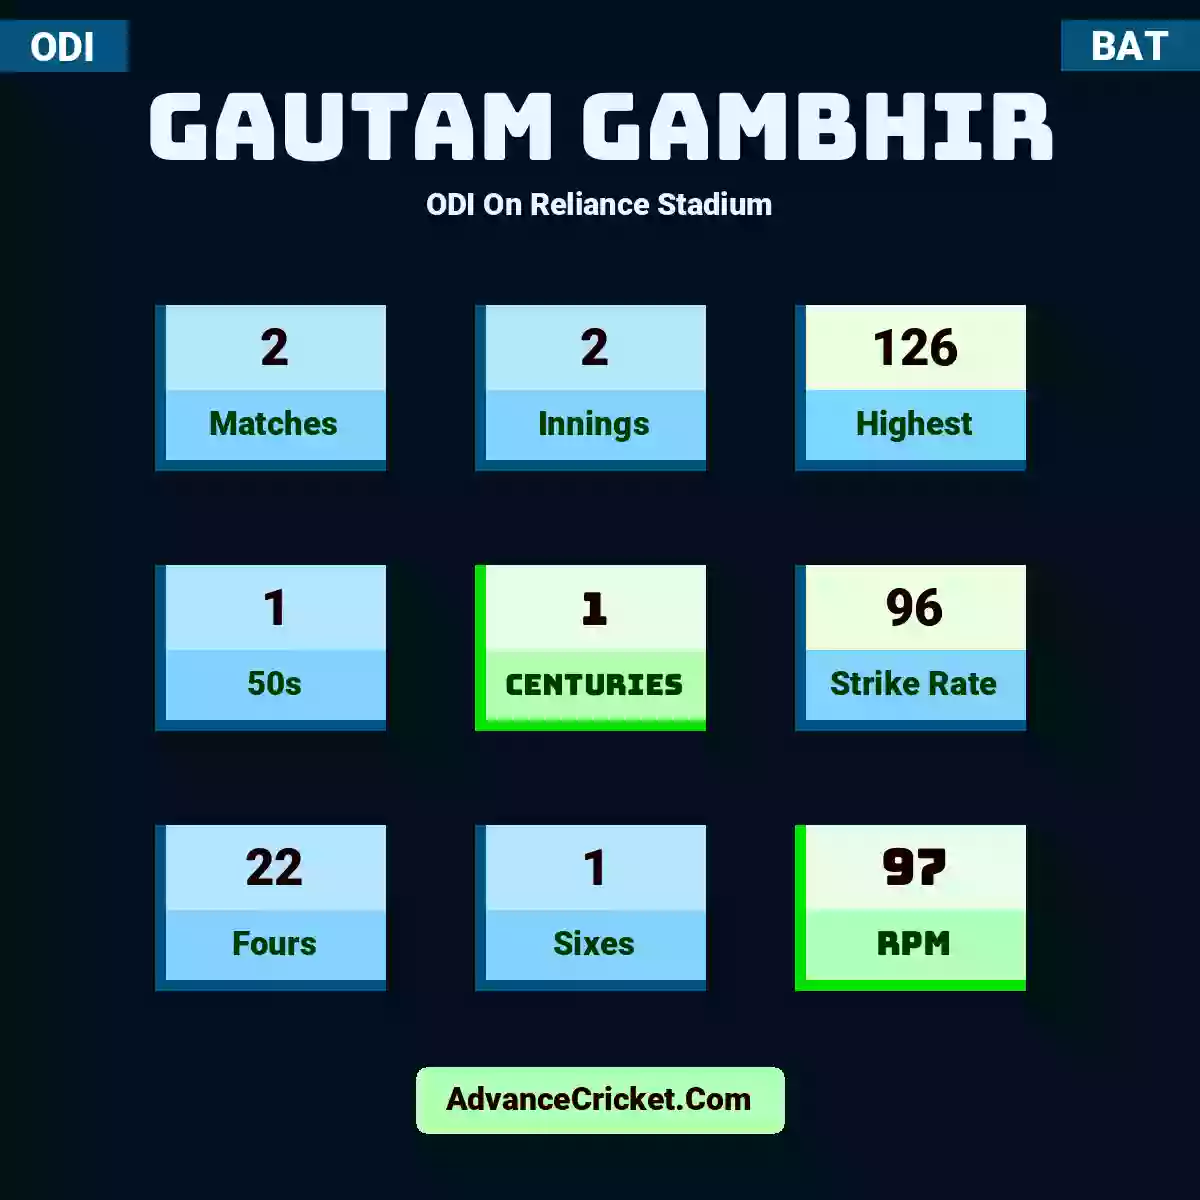 Gautam Gambhir ODI  On Reliance Stadium, Gautam Gambhir played 2 matches, scored 126 runs as highest, 1 half-centuries, and 1 centuries, with a strike rate of 96. G.Gambhir hit 22 fours and 1 sixes, with an RPM of 97.